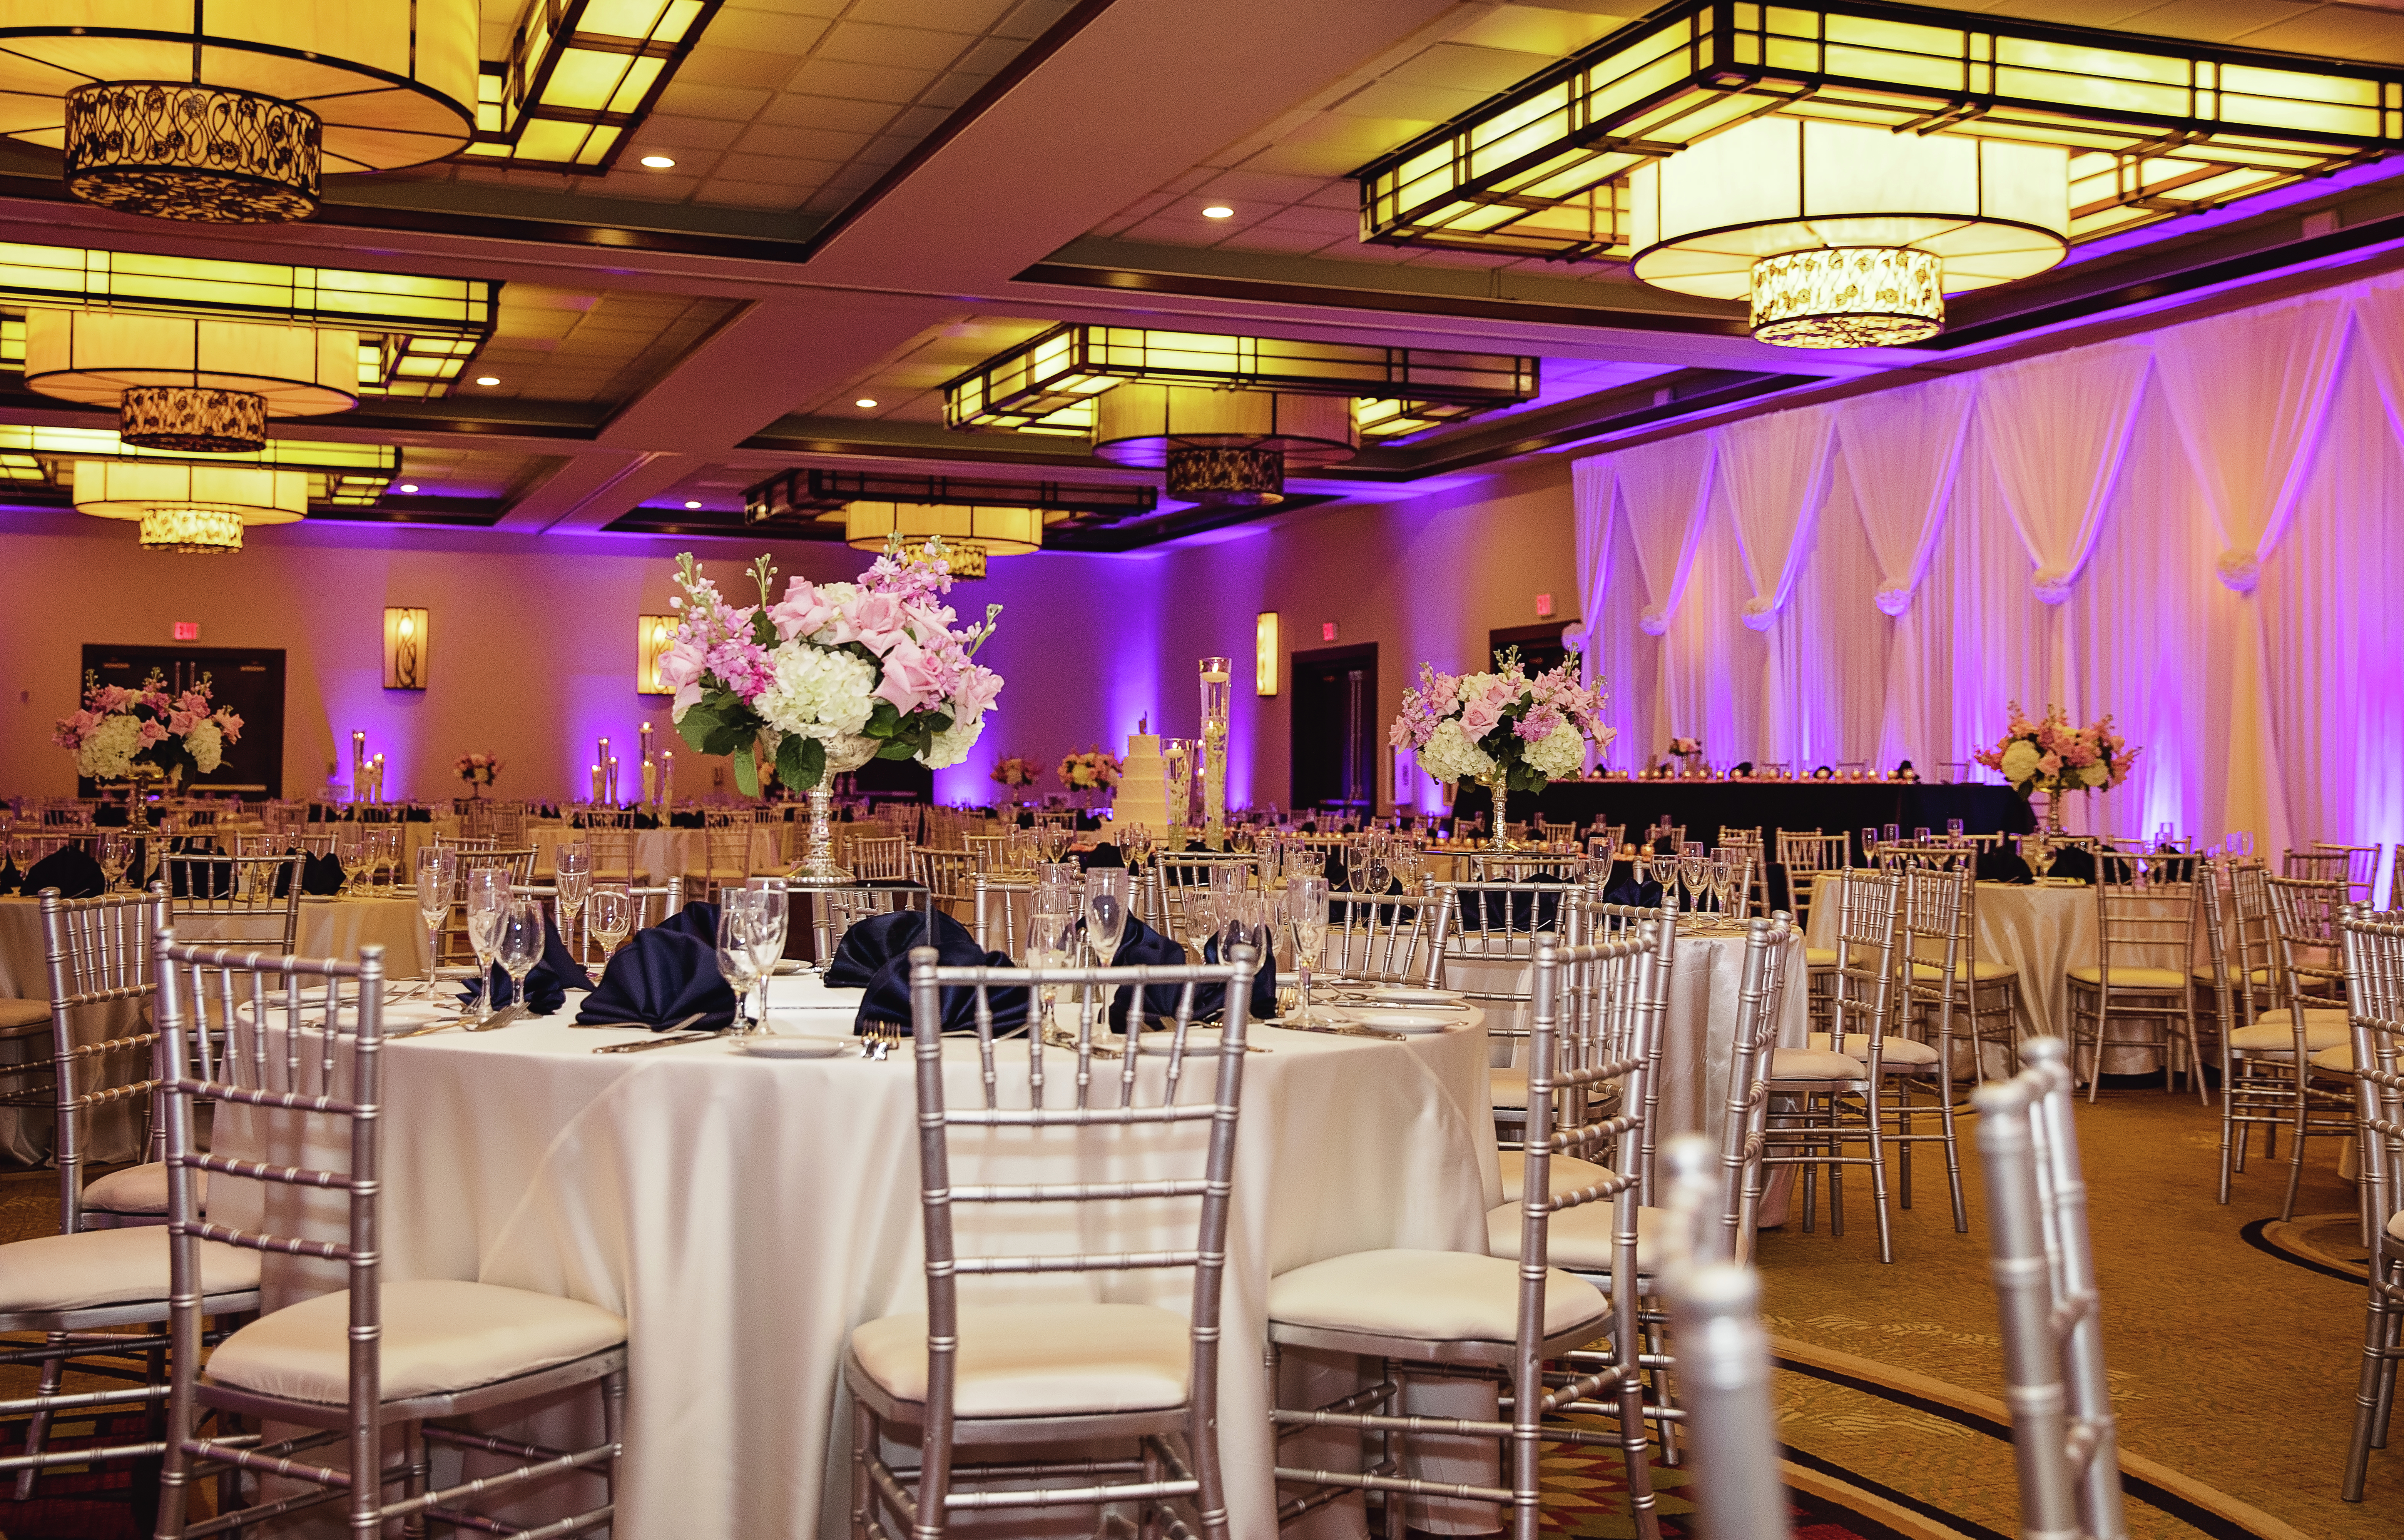 Banquet Hall set up for wedding reception